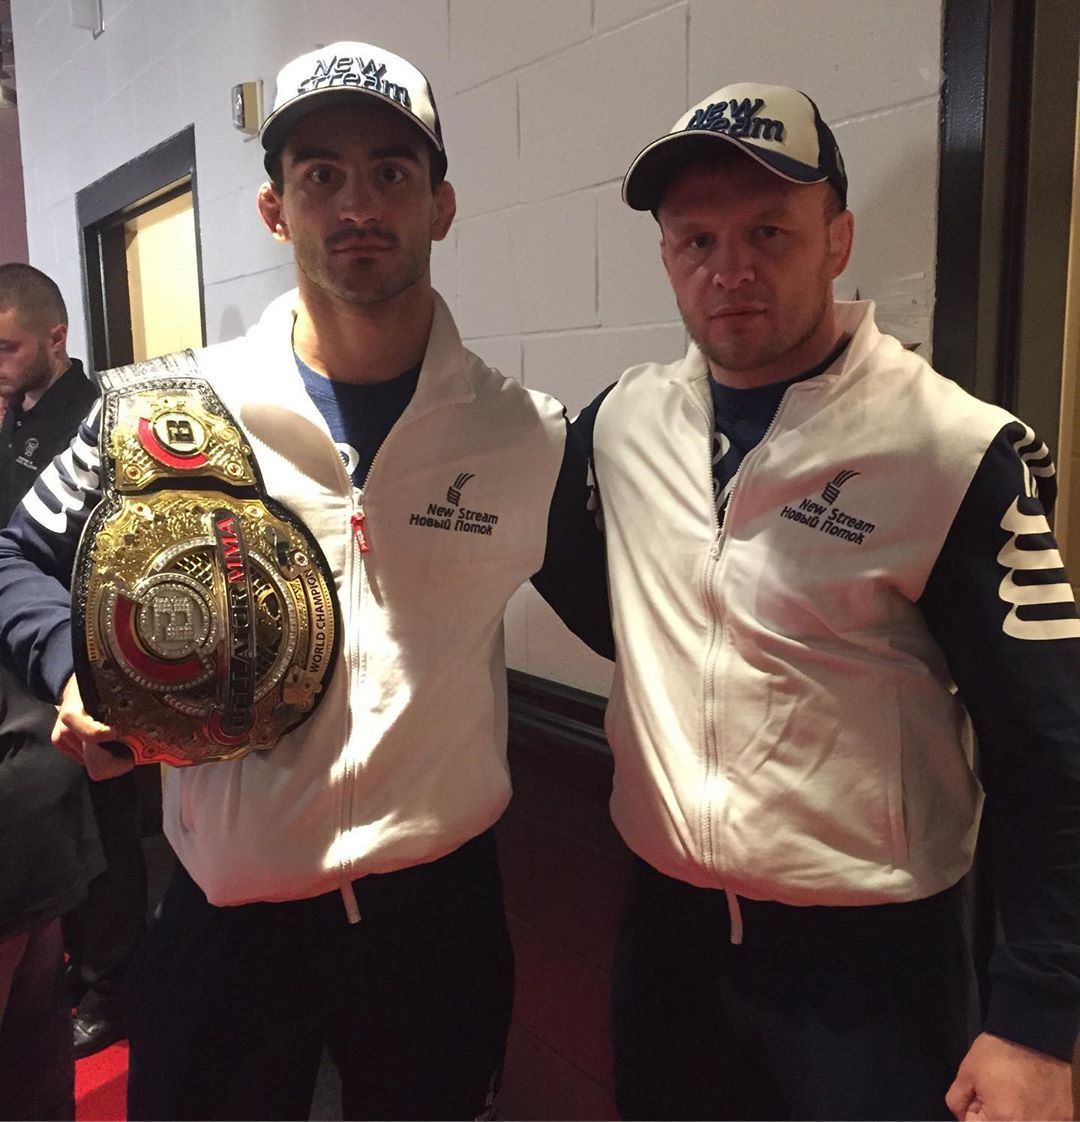 Андрей Корешков с чемпионским поясом Bellator и Александр Шлеменко